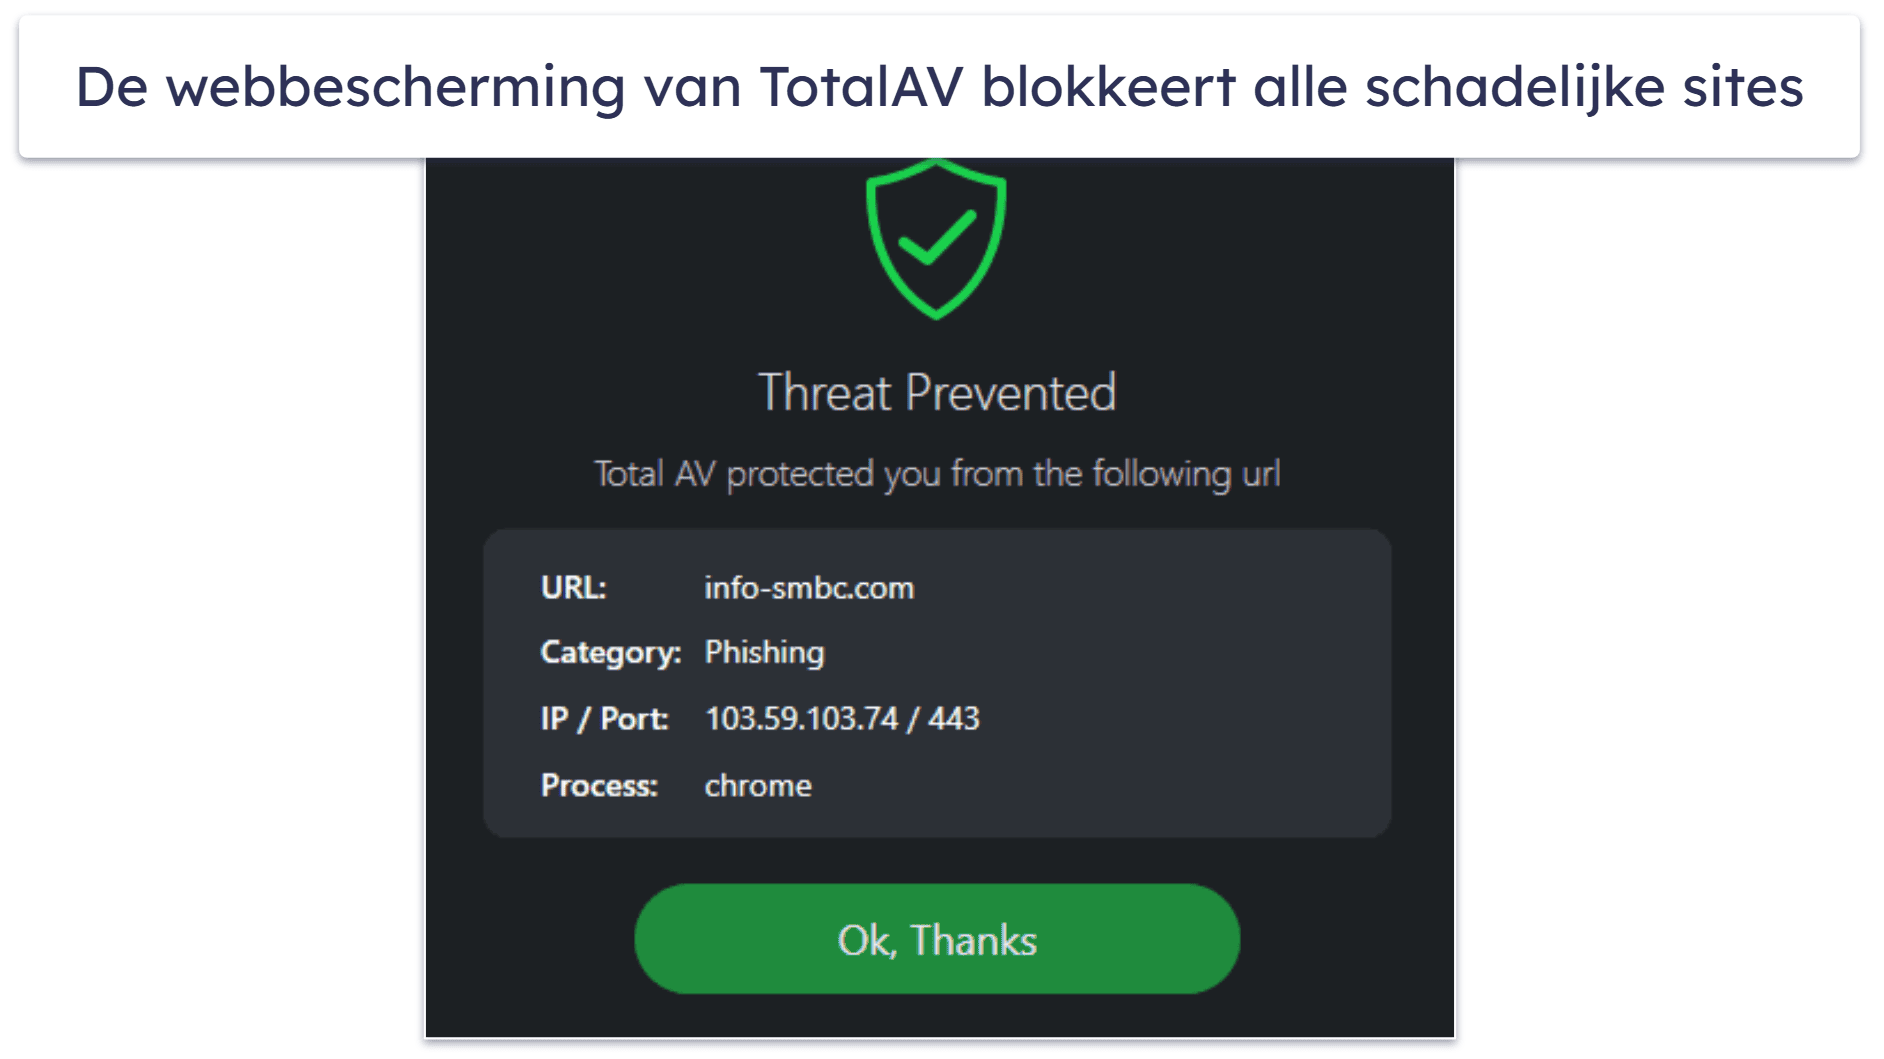 4. TotalAV Free antivirus – Meest intuïtieve gratis antivirus